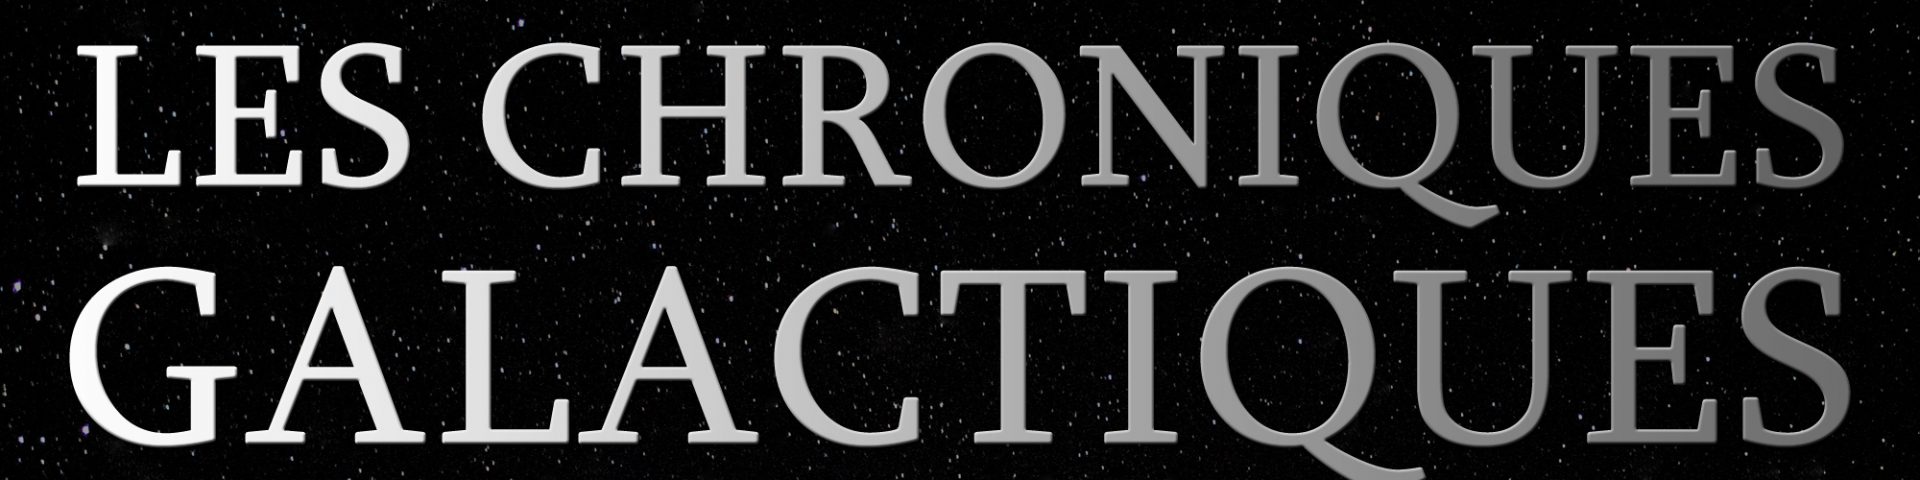 chroniques galactiques podcast fiction audio star wars